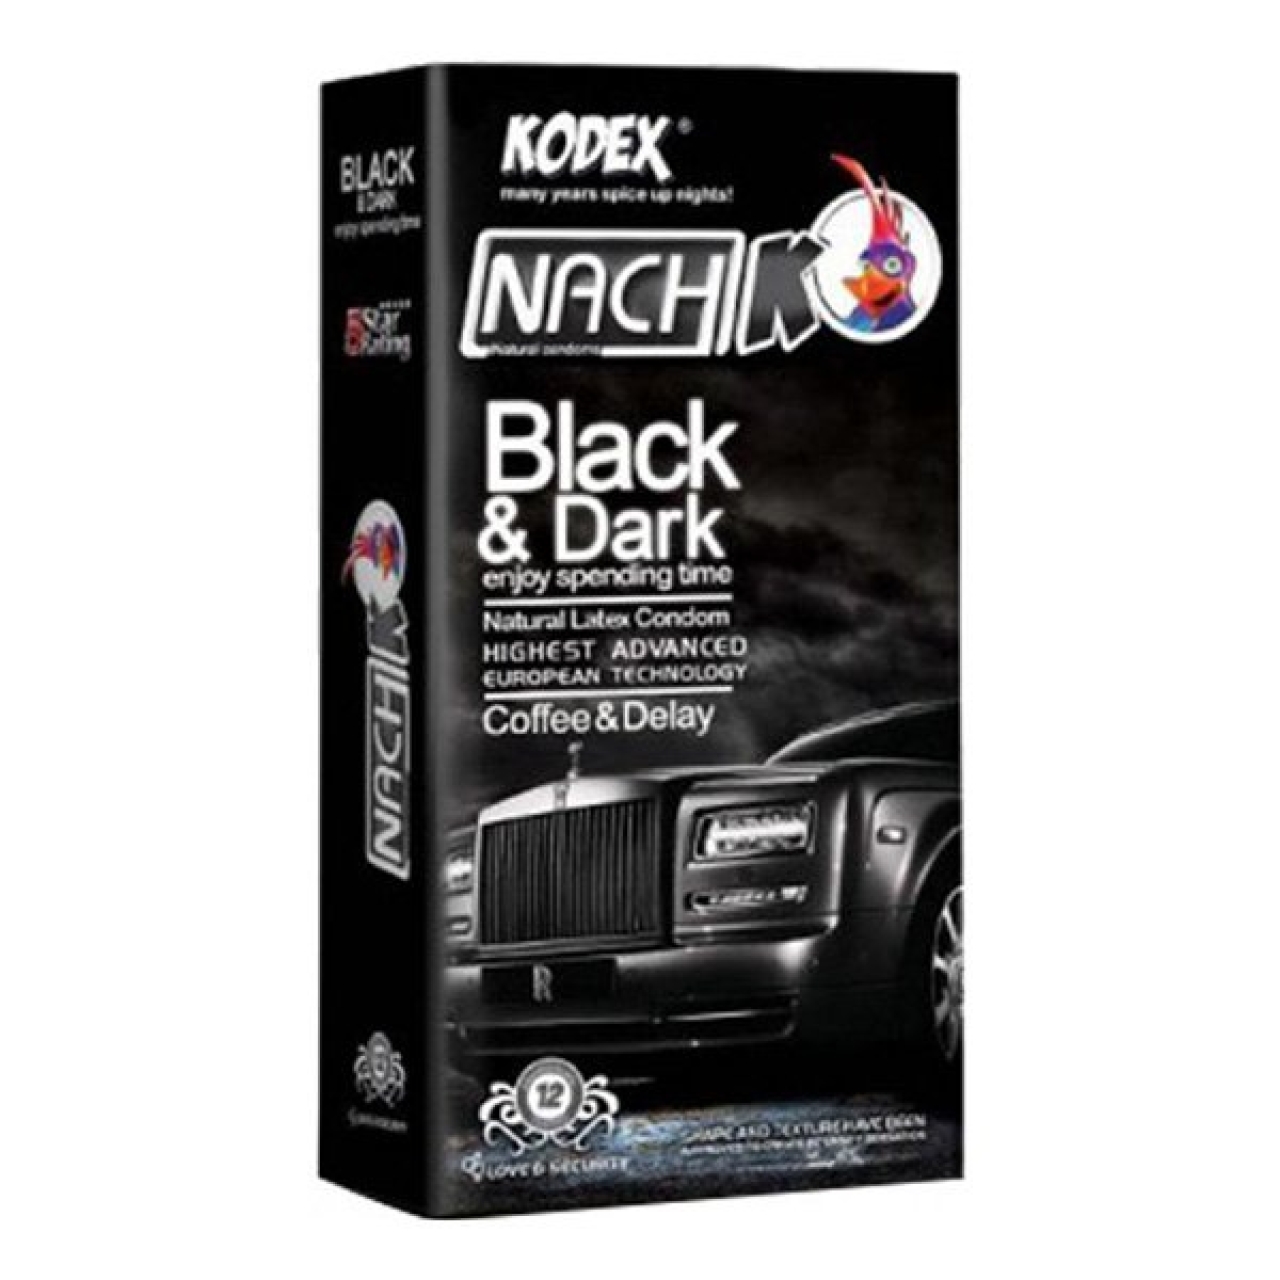 کاندوم ناچ کدکس مدل Black & Dark بسته 12 عددی